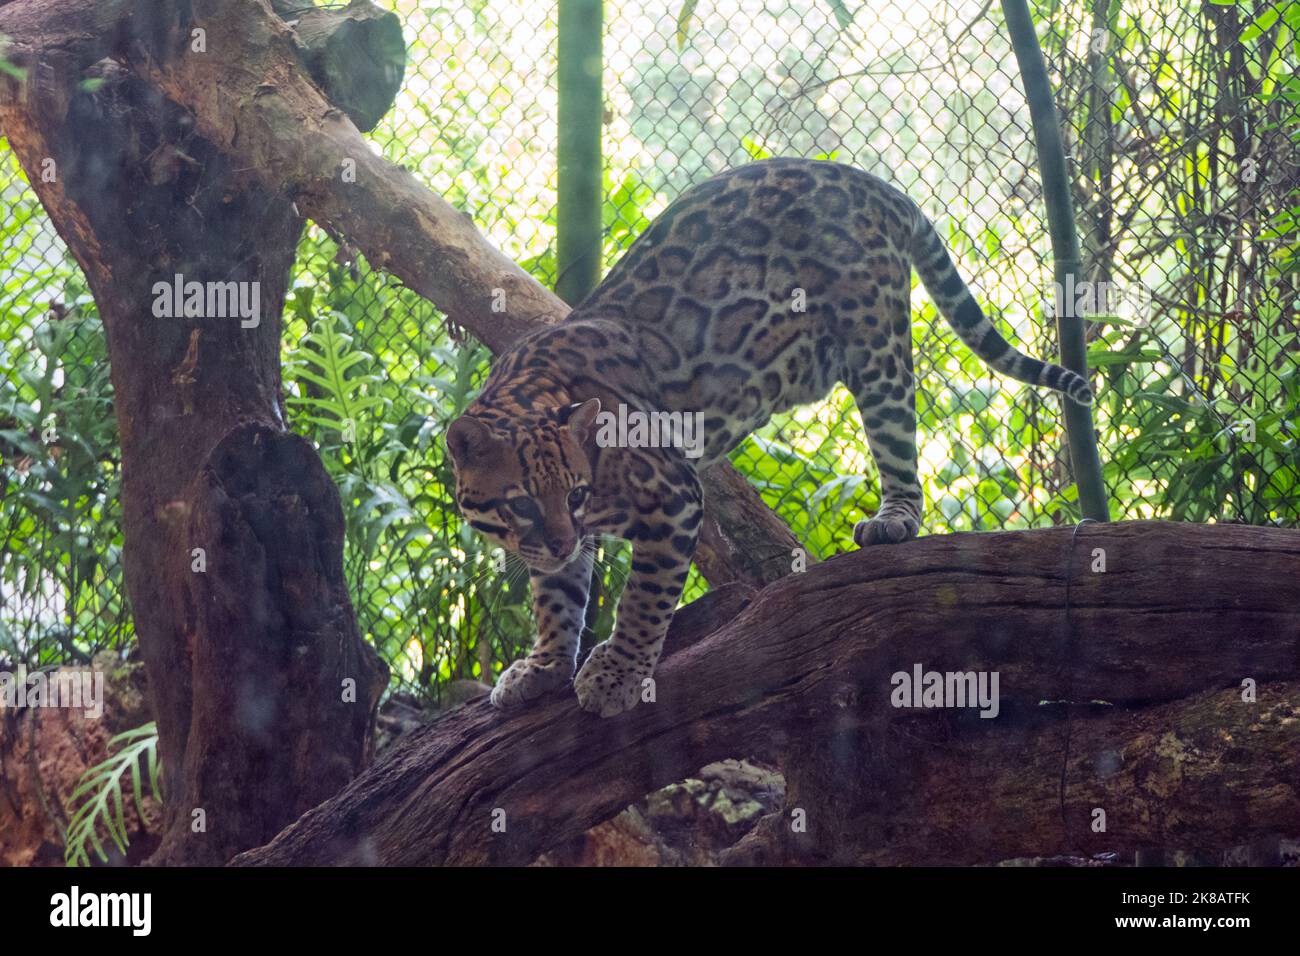 Ocelot (Leopardus pardalis) in zoo cage in Chiapas, Mexico. Small feline in enclosure Stock Photo